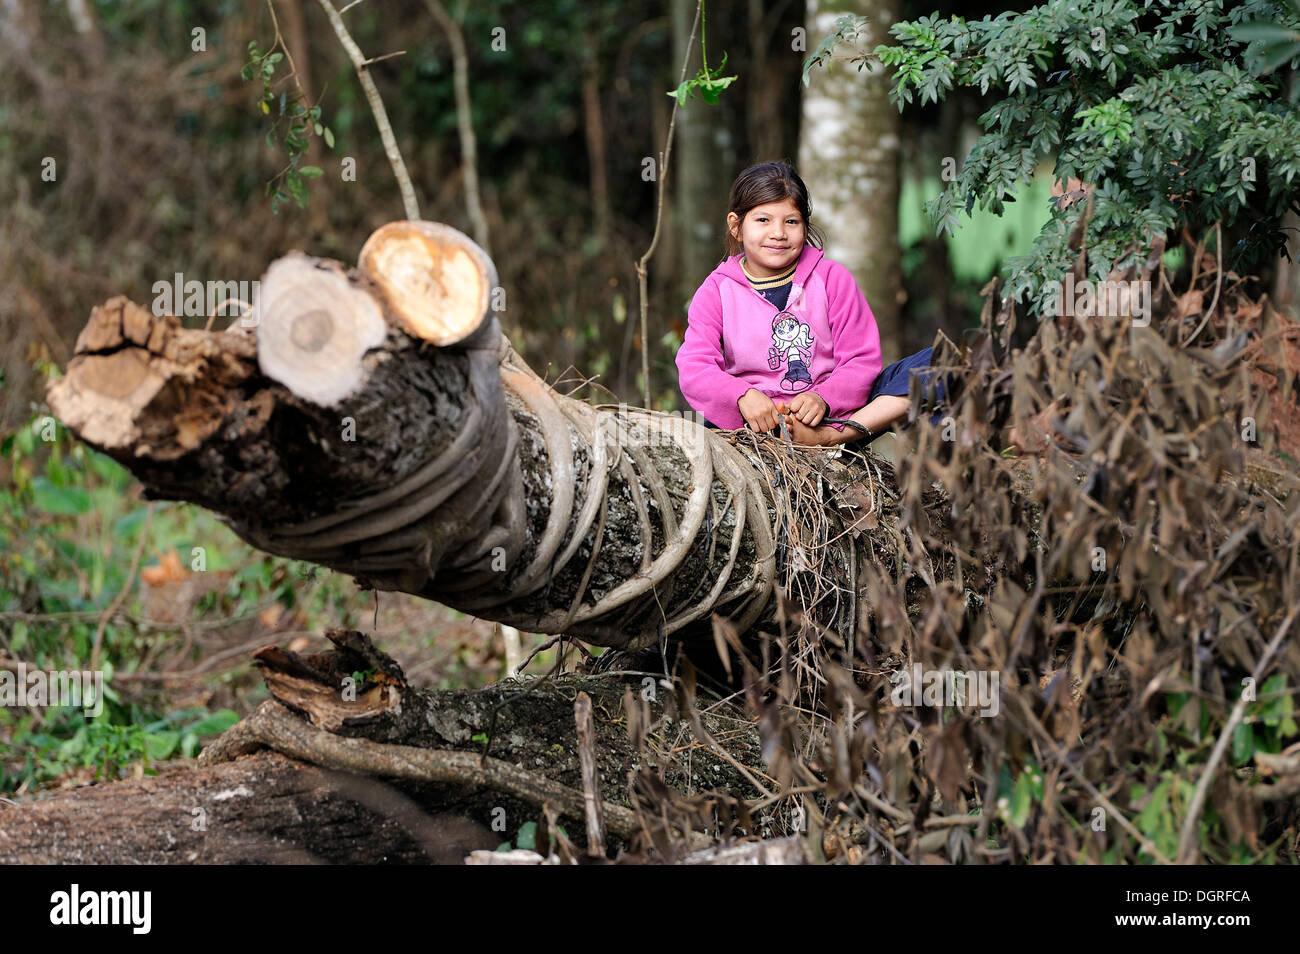 Paraguay, Caaguazu, Jaguary, Guarani girl sitting on tree trunk Stock Photo